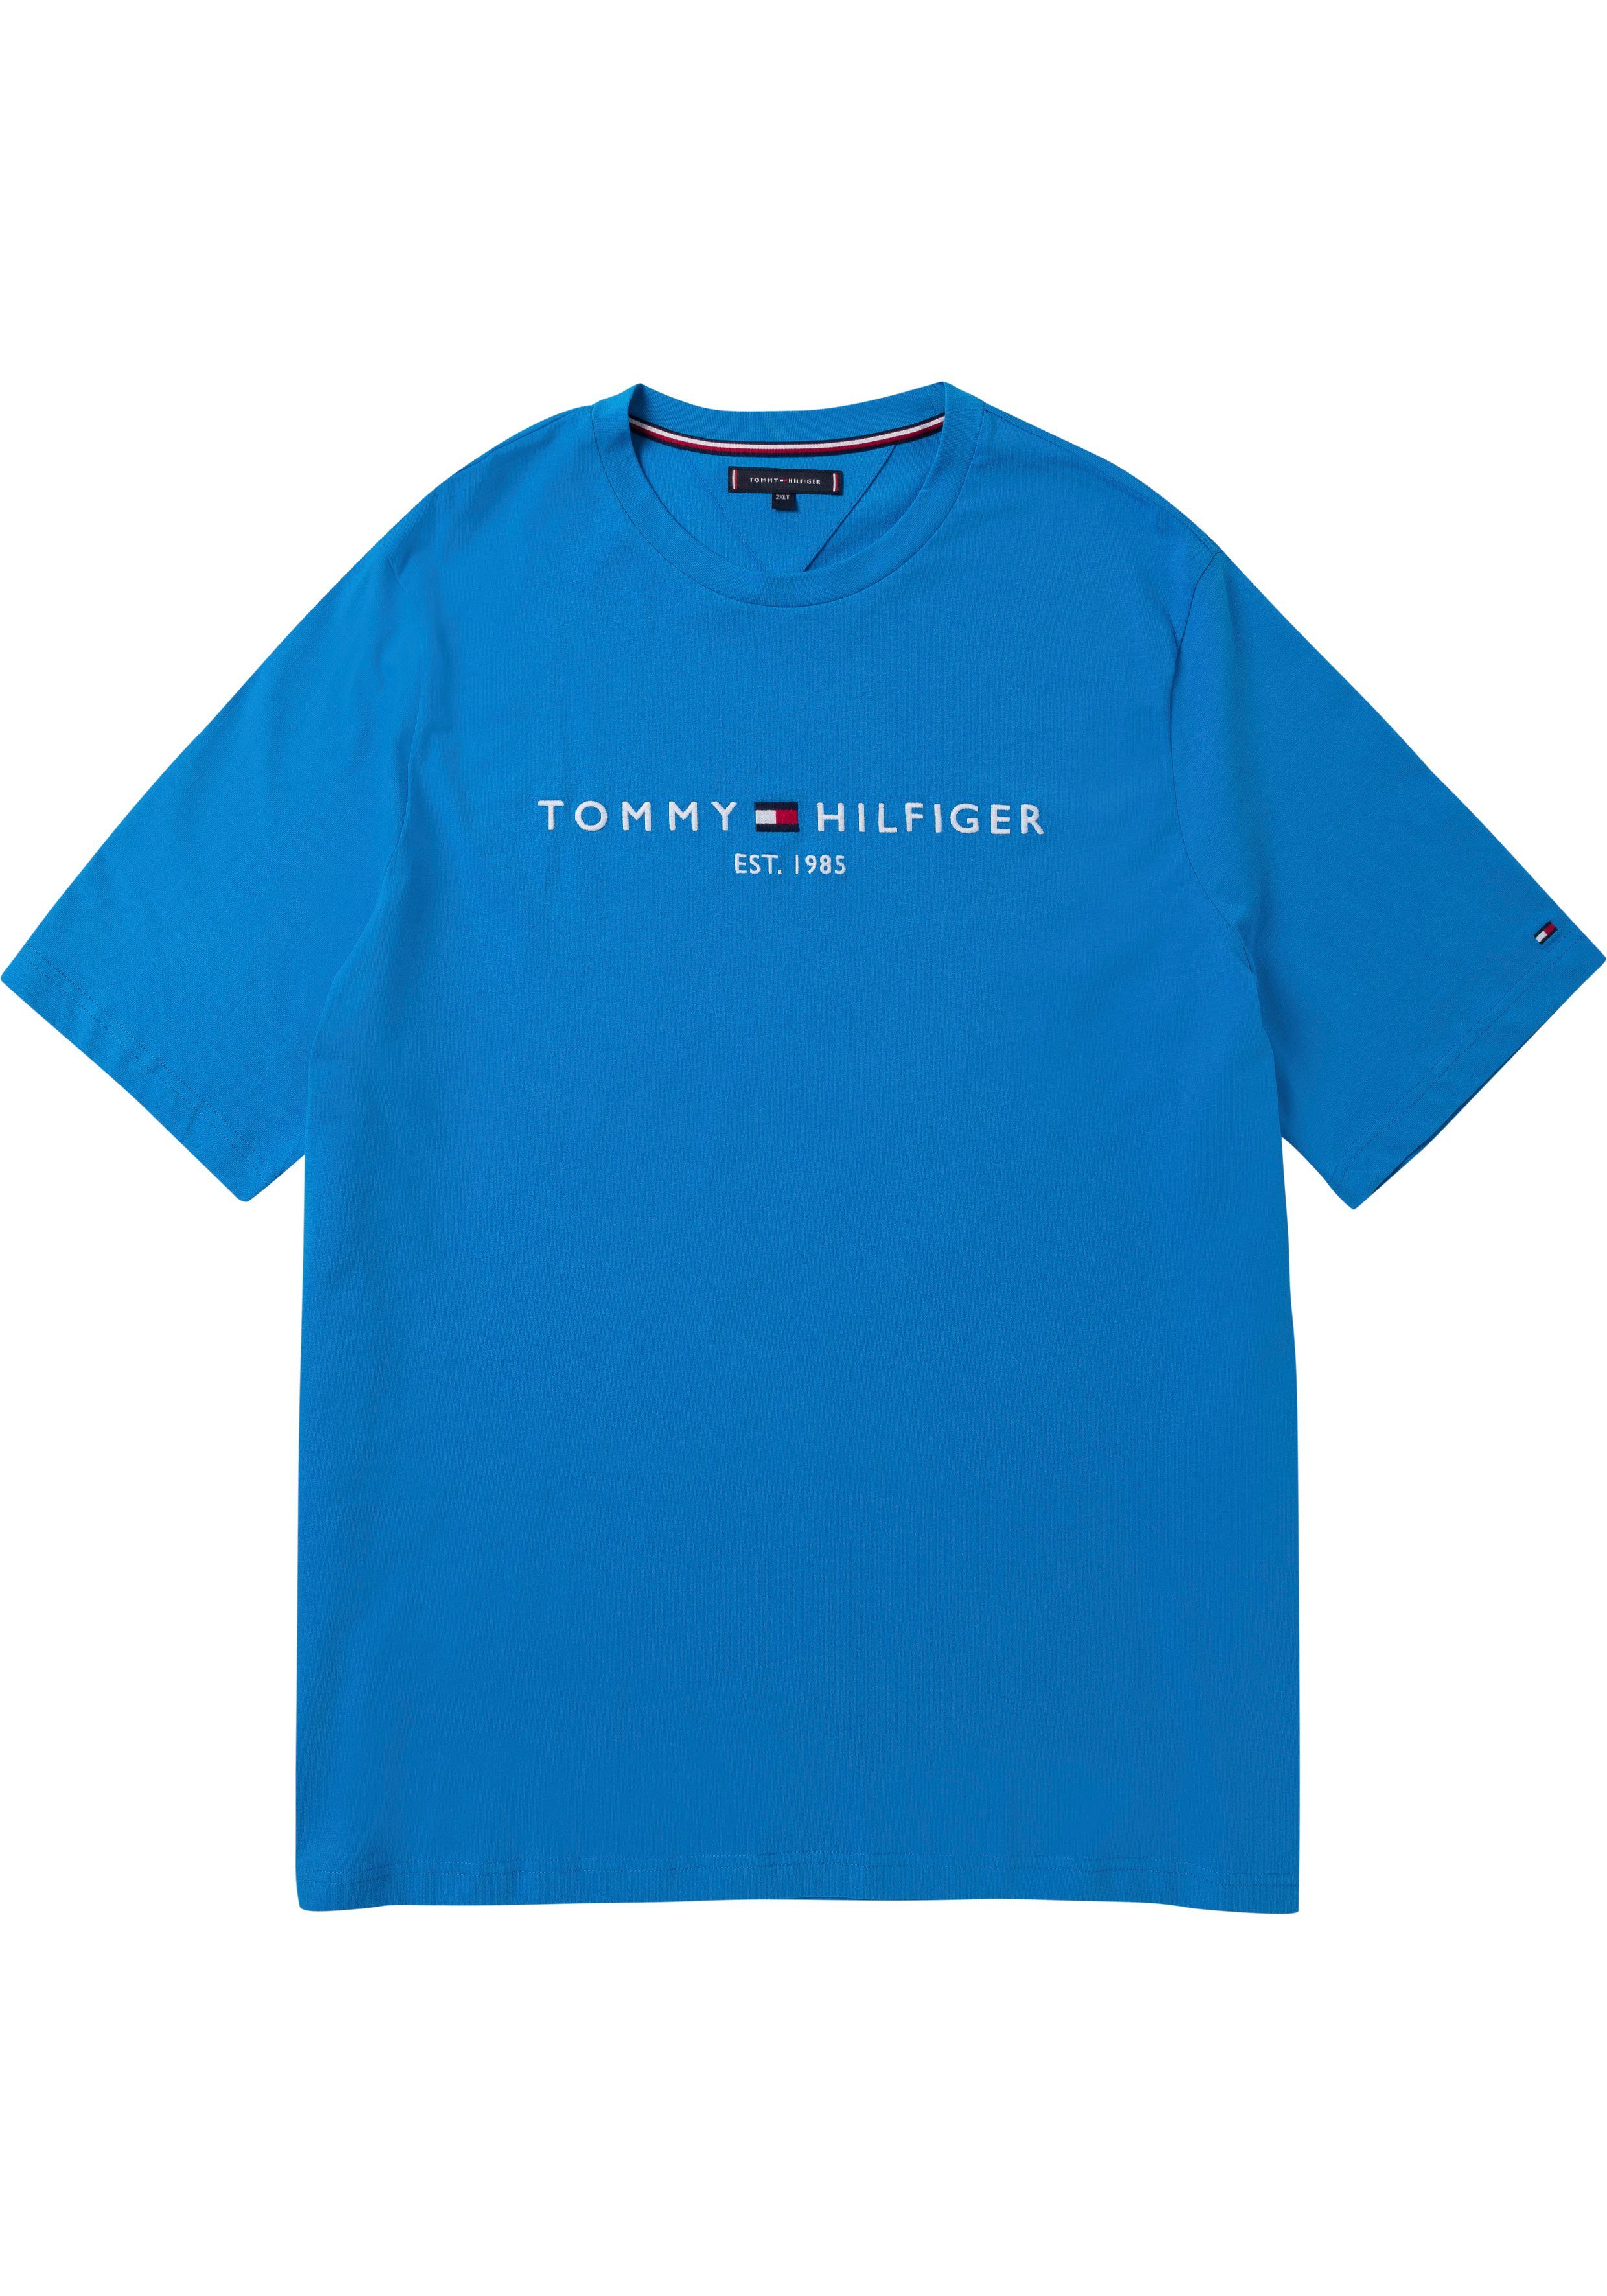 Tommy Hilfiger Big auf LOGO Logoschriftzug azurblau Brust & TEE-B Hilfiger BT-TOMMY der T-Shirt Tommy mit Tall